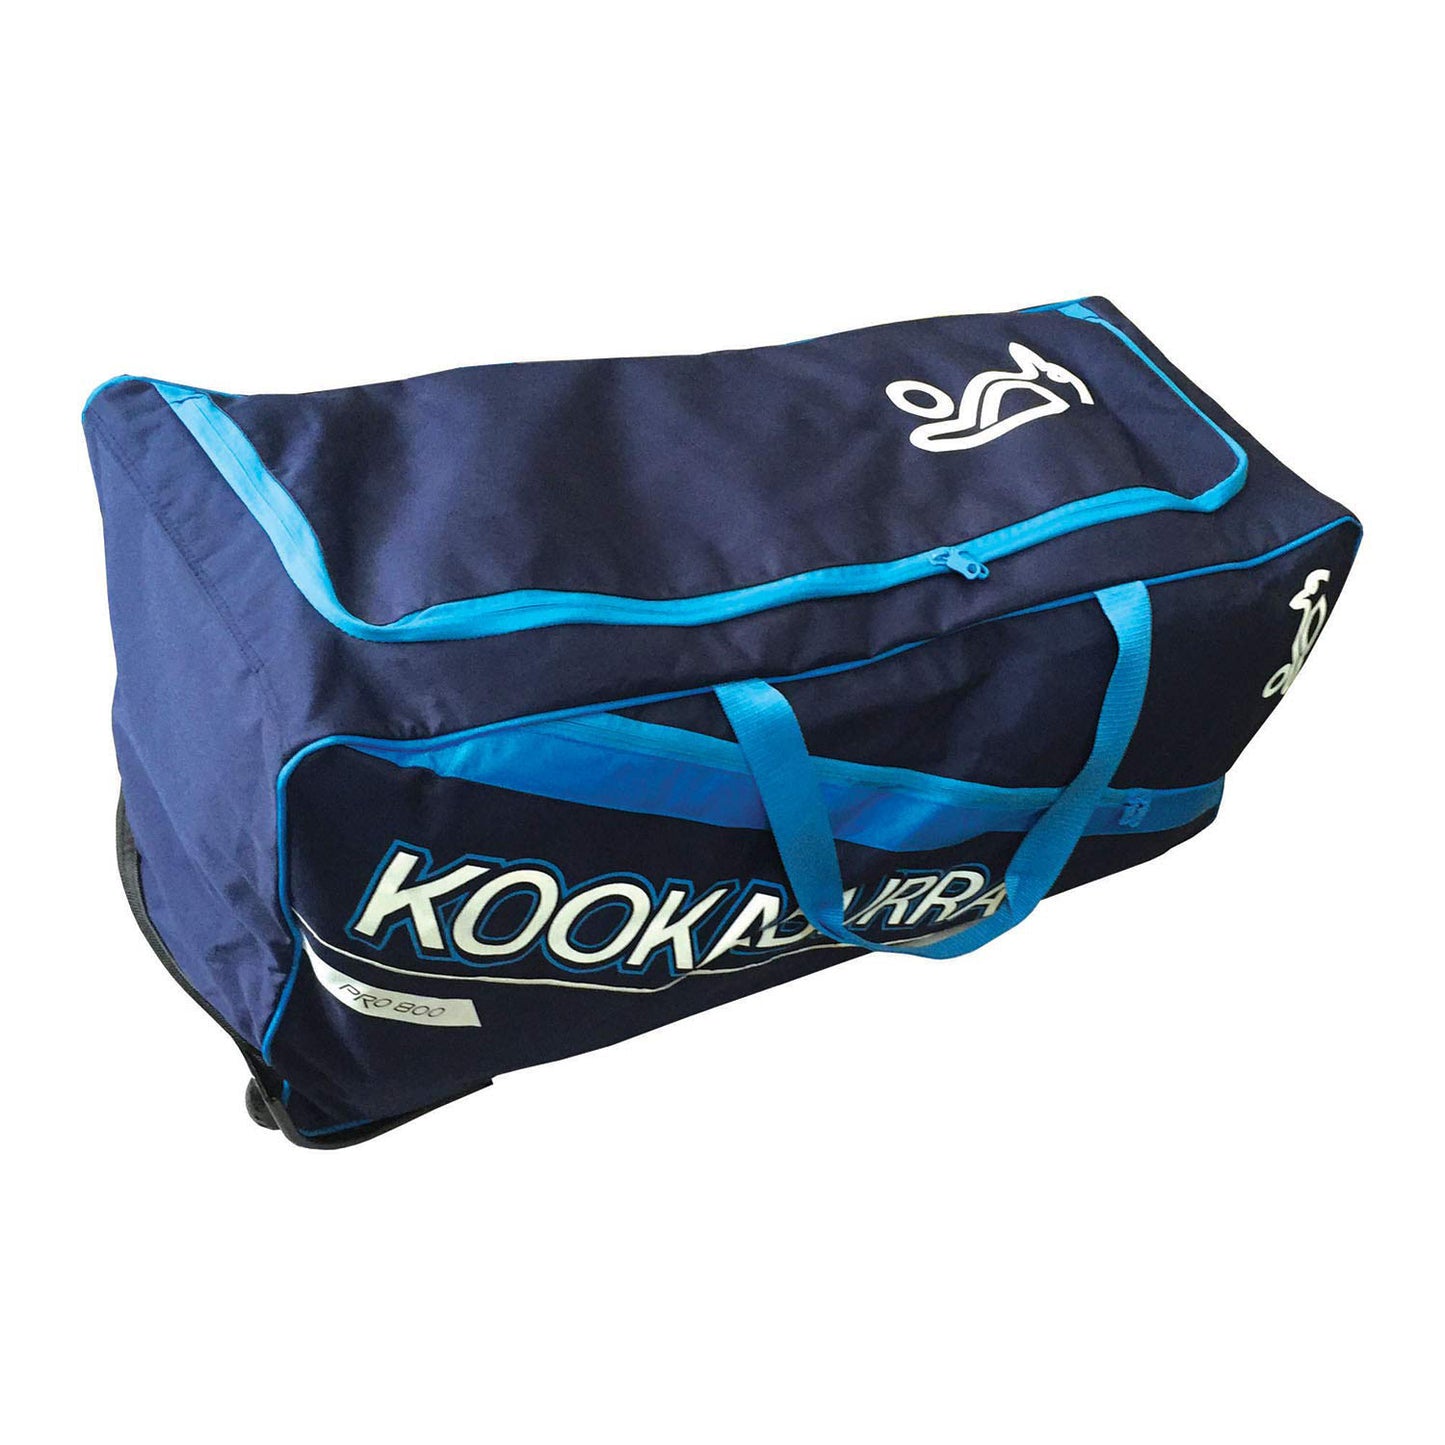 Kookaburra Adult Kit Bag KB Pro 800 - Best Price online Prokicksports.com